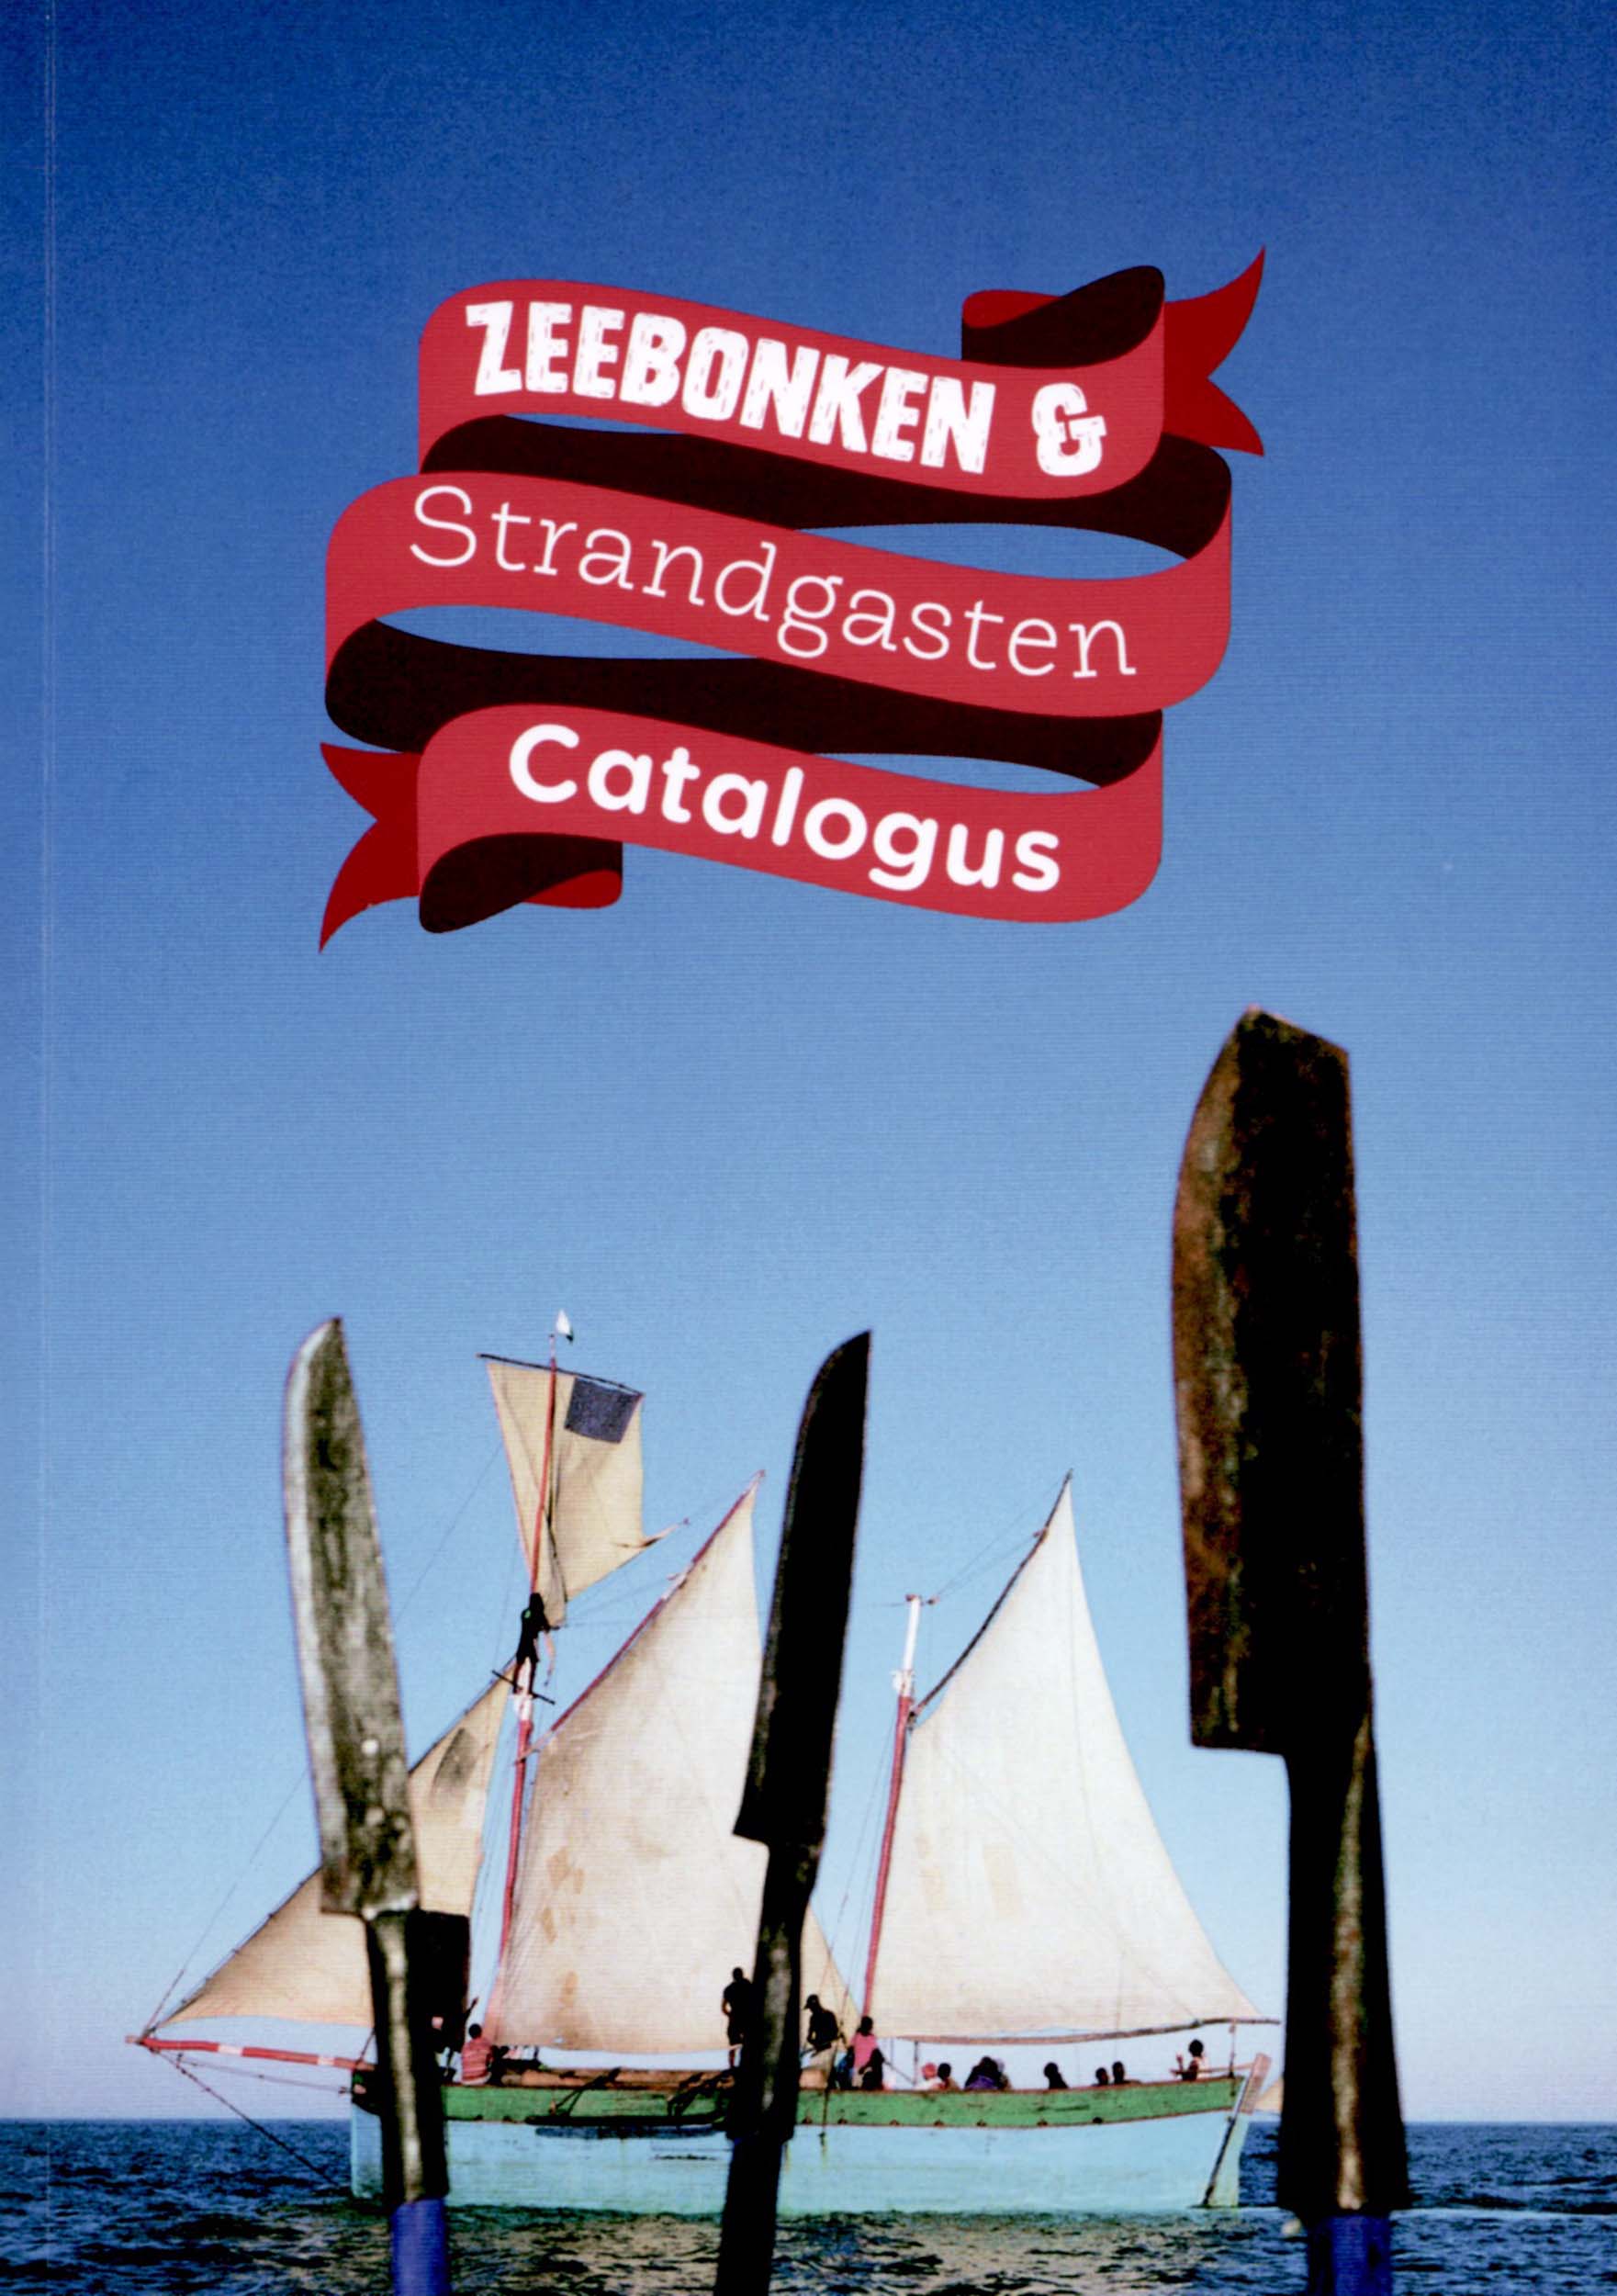 Zeebonken & Strandgasten Catalogue